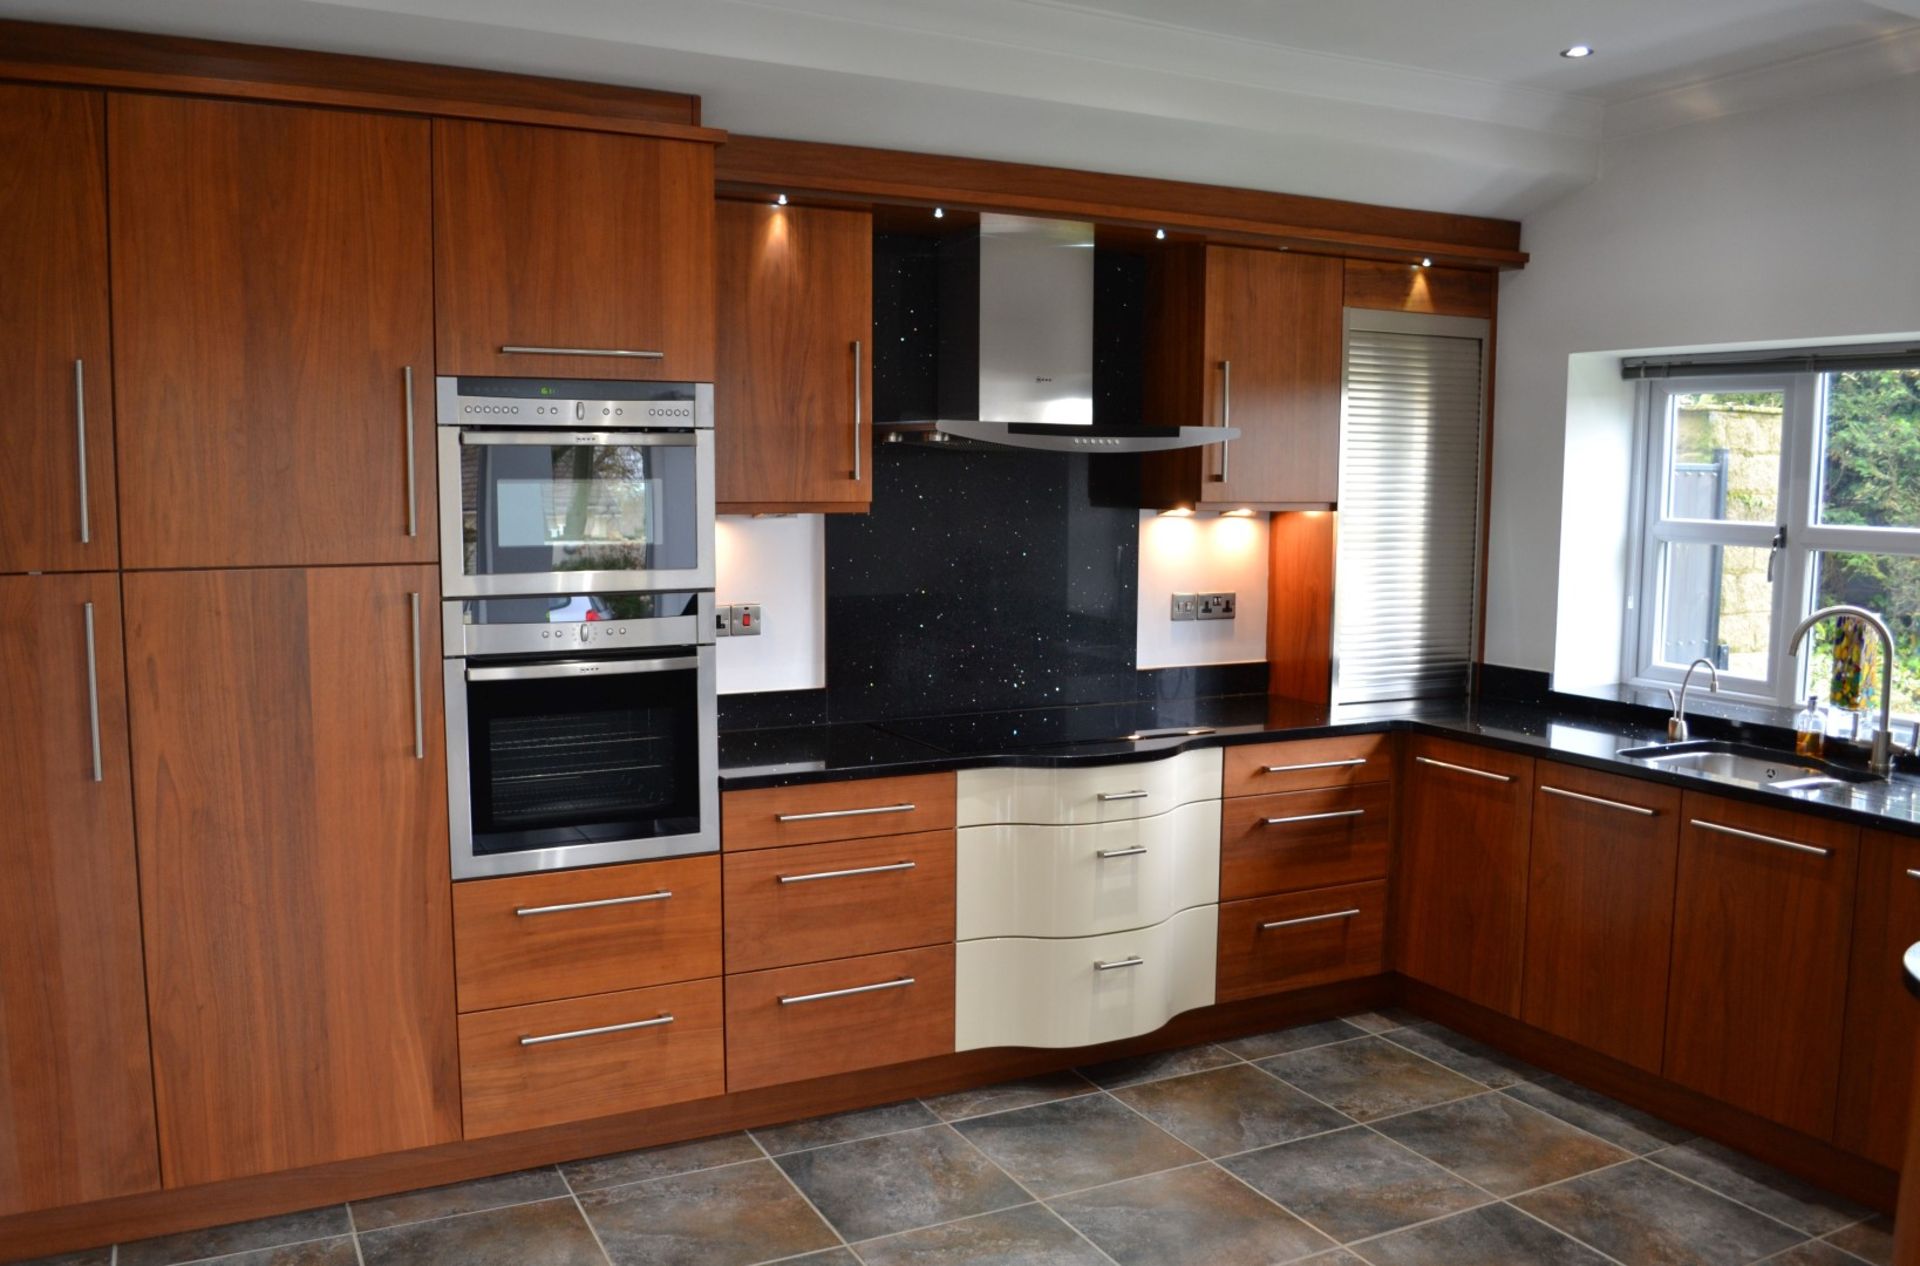 1 x Kitchen Design Bespoke Fitted Kitchen With Silestone Worktops & Neff Appliances - Superb - Image 55 of 59